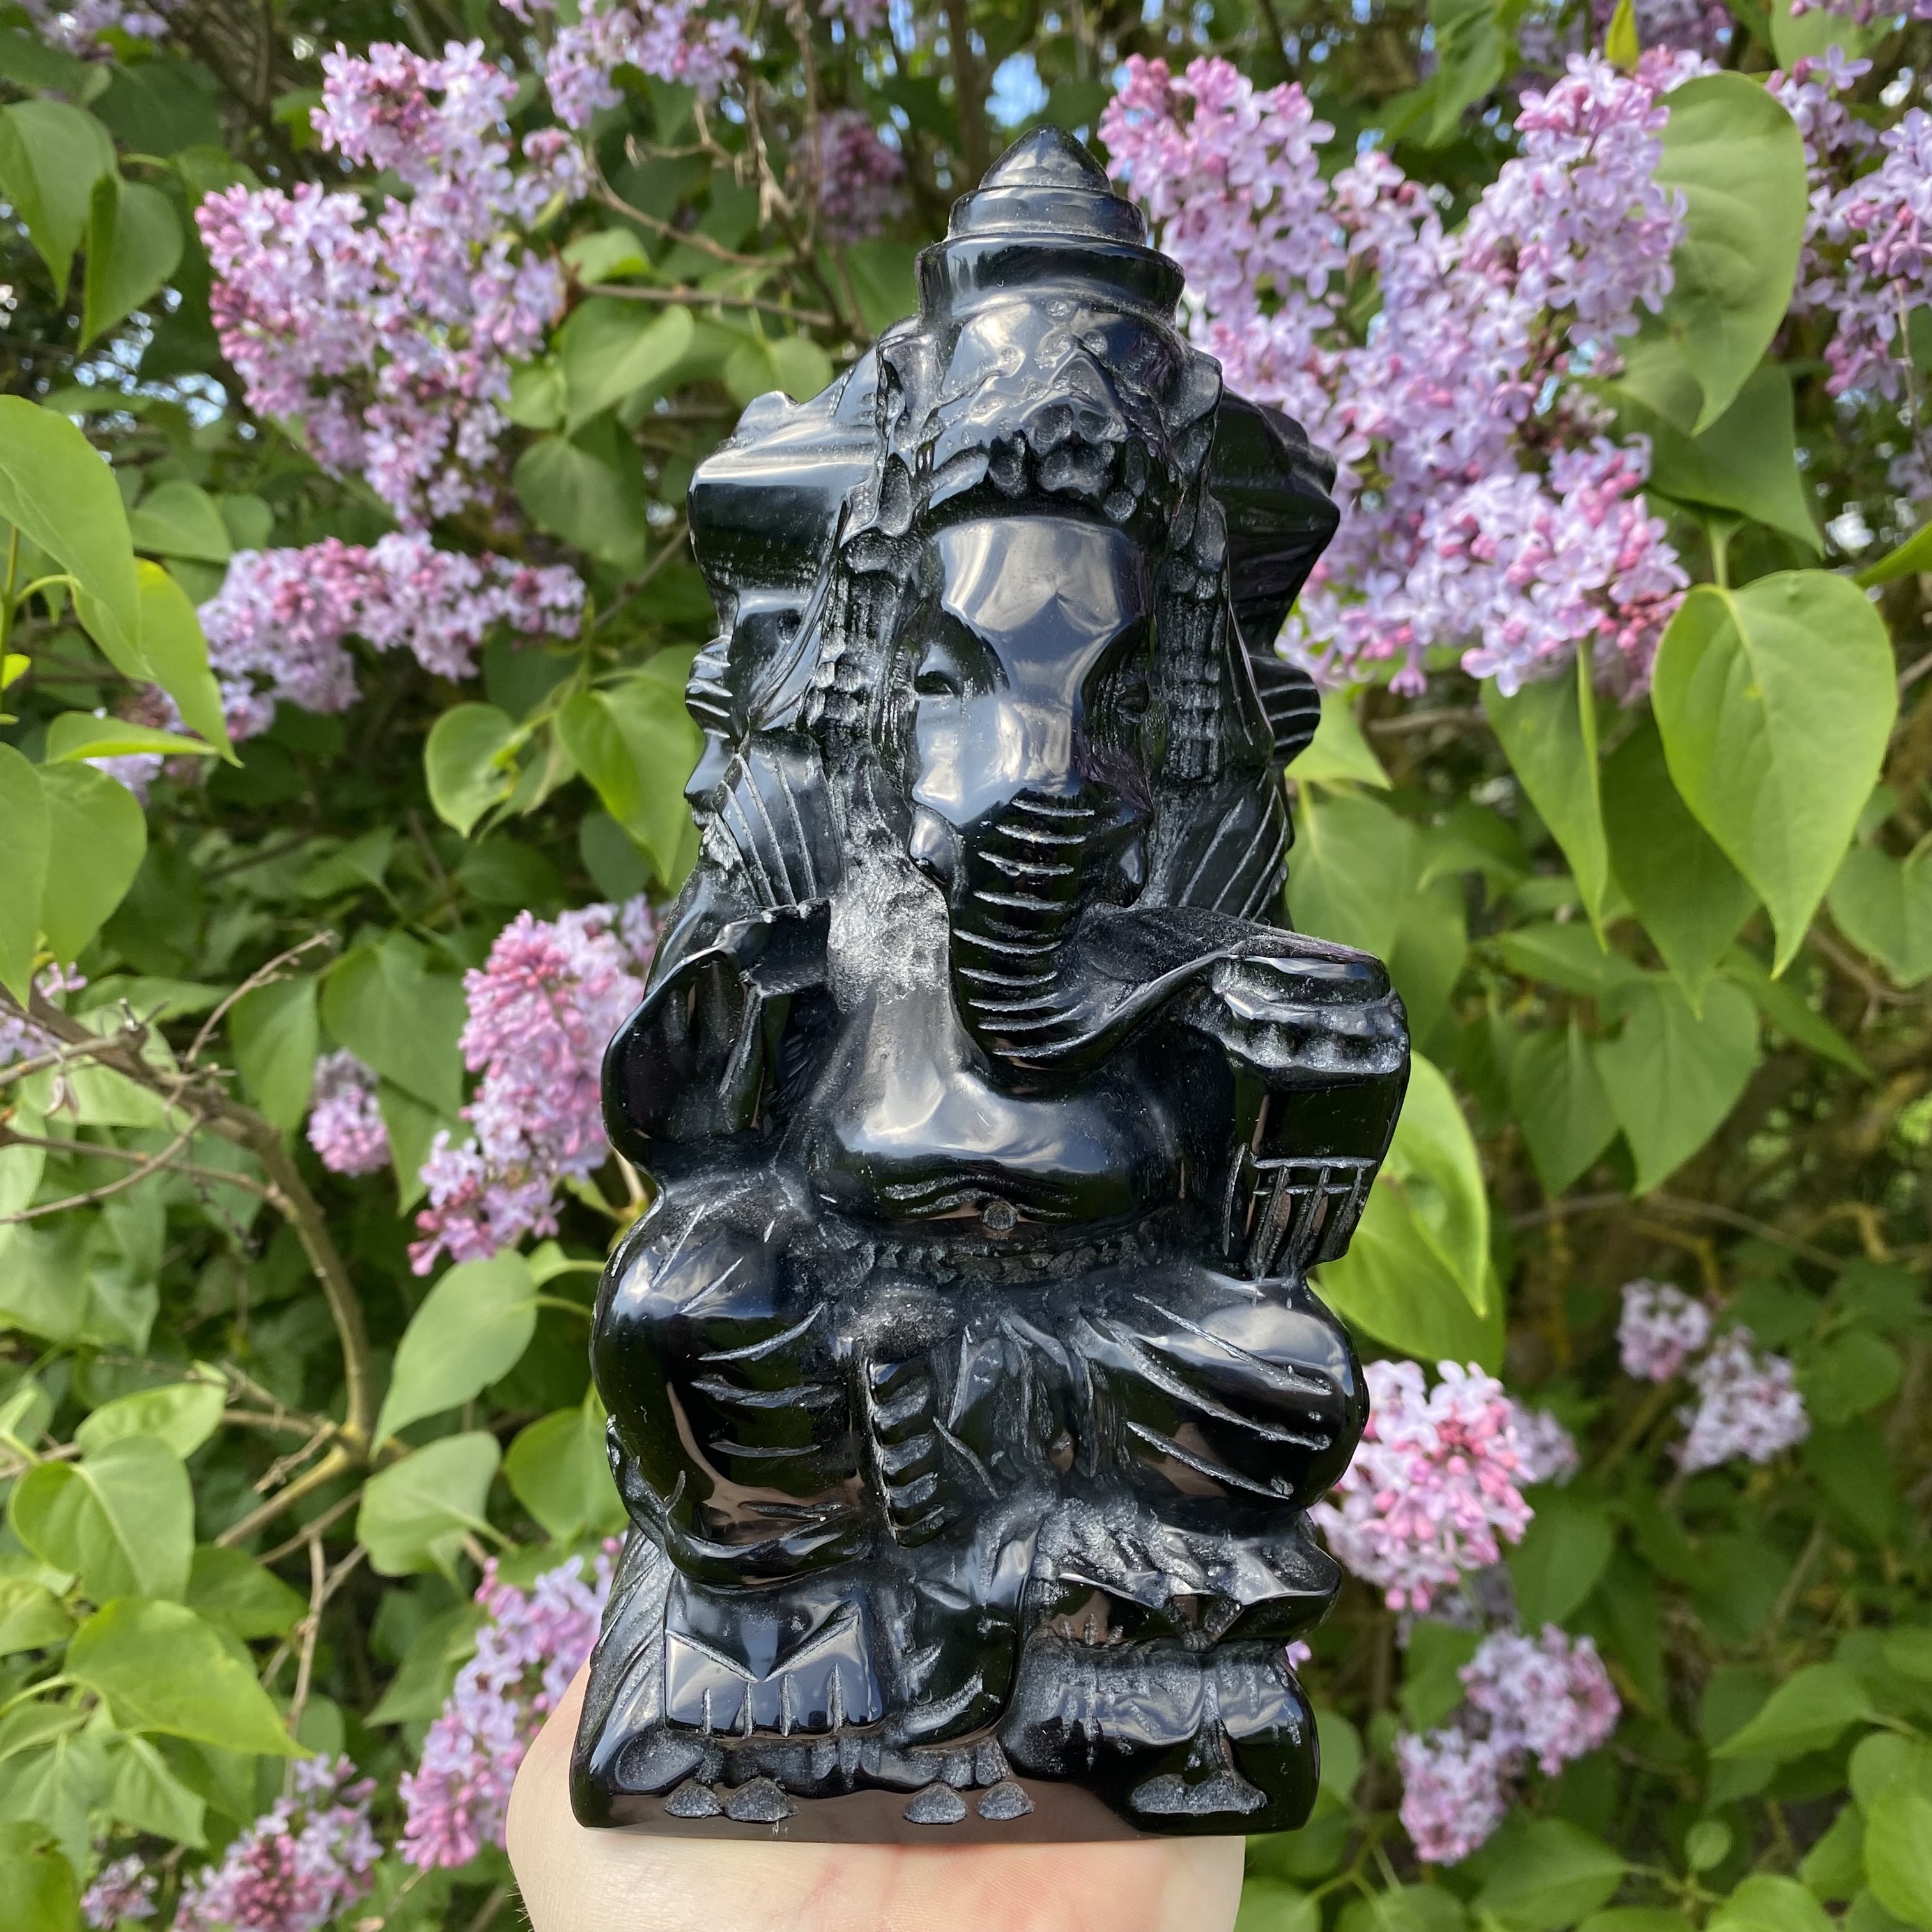 Sort obsidian Ganesh